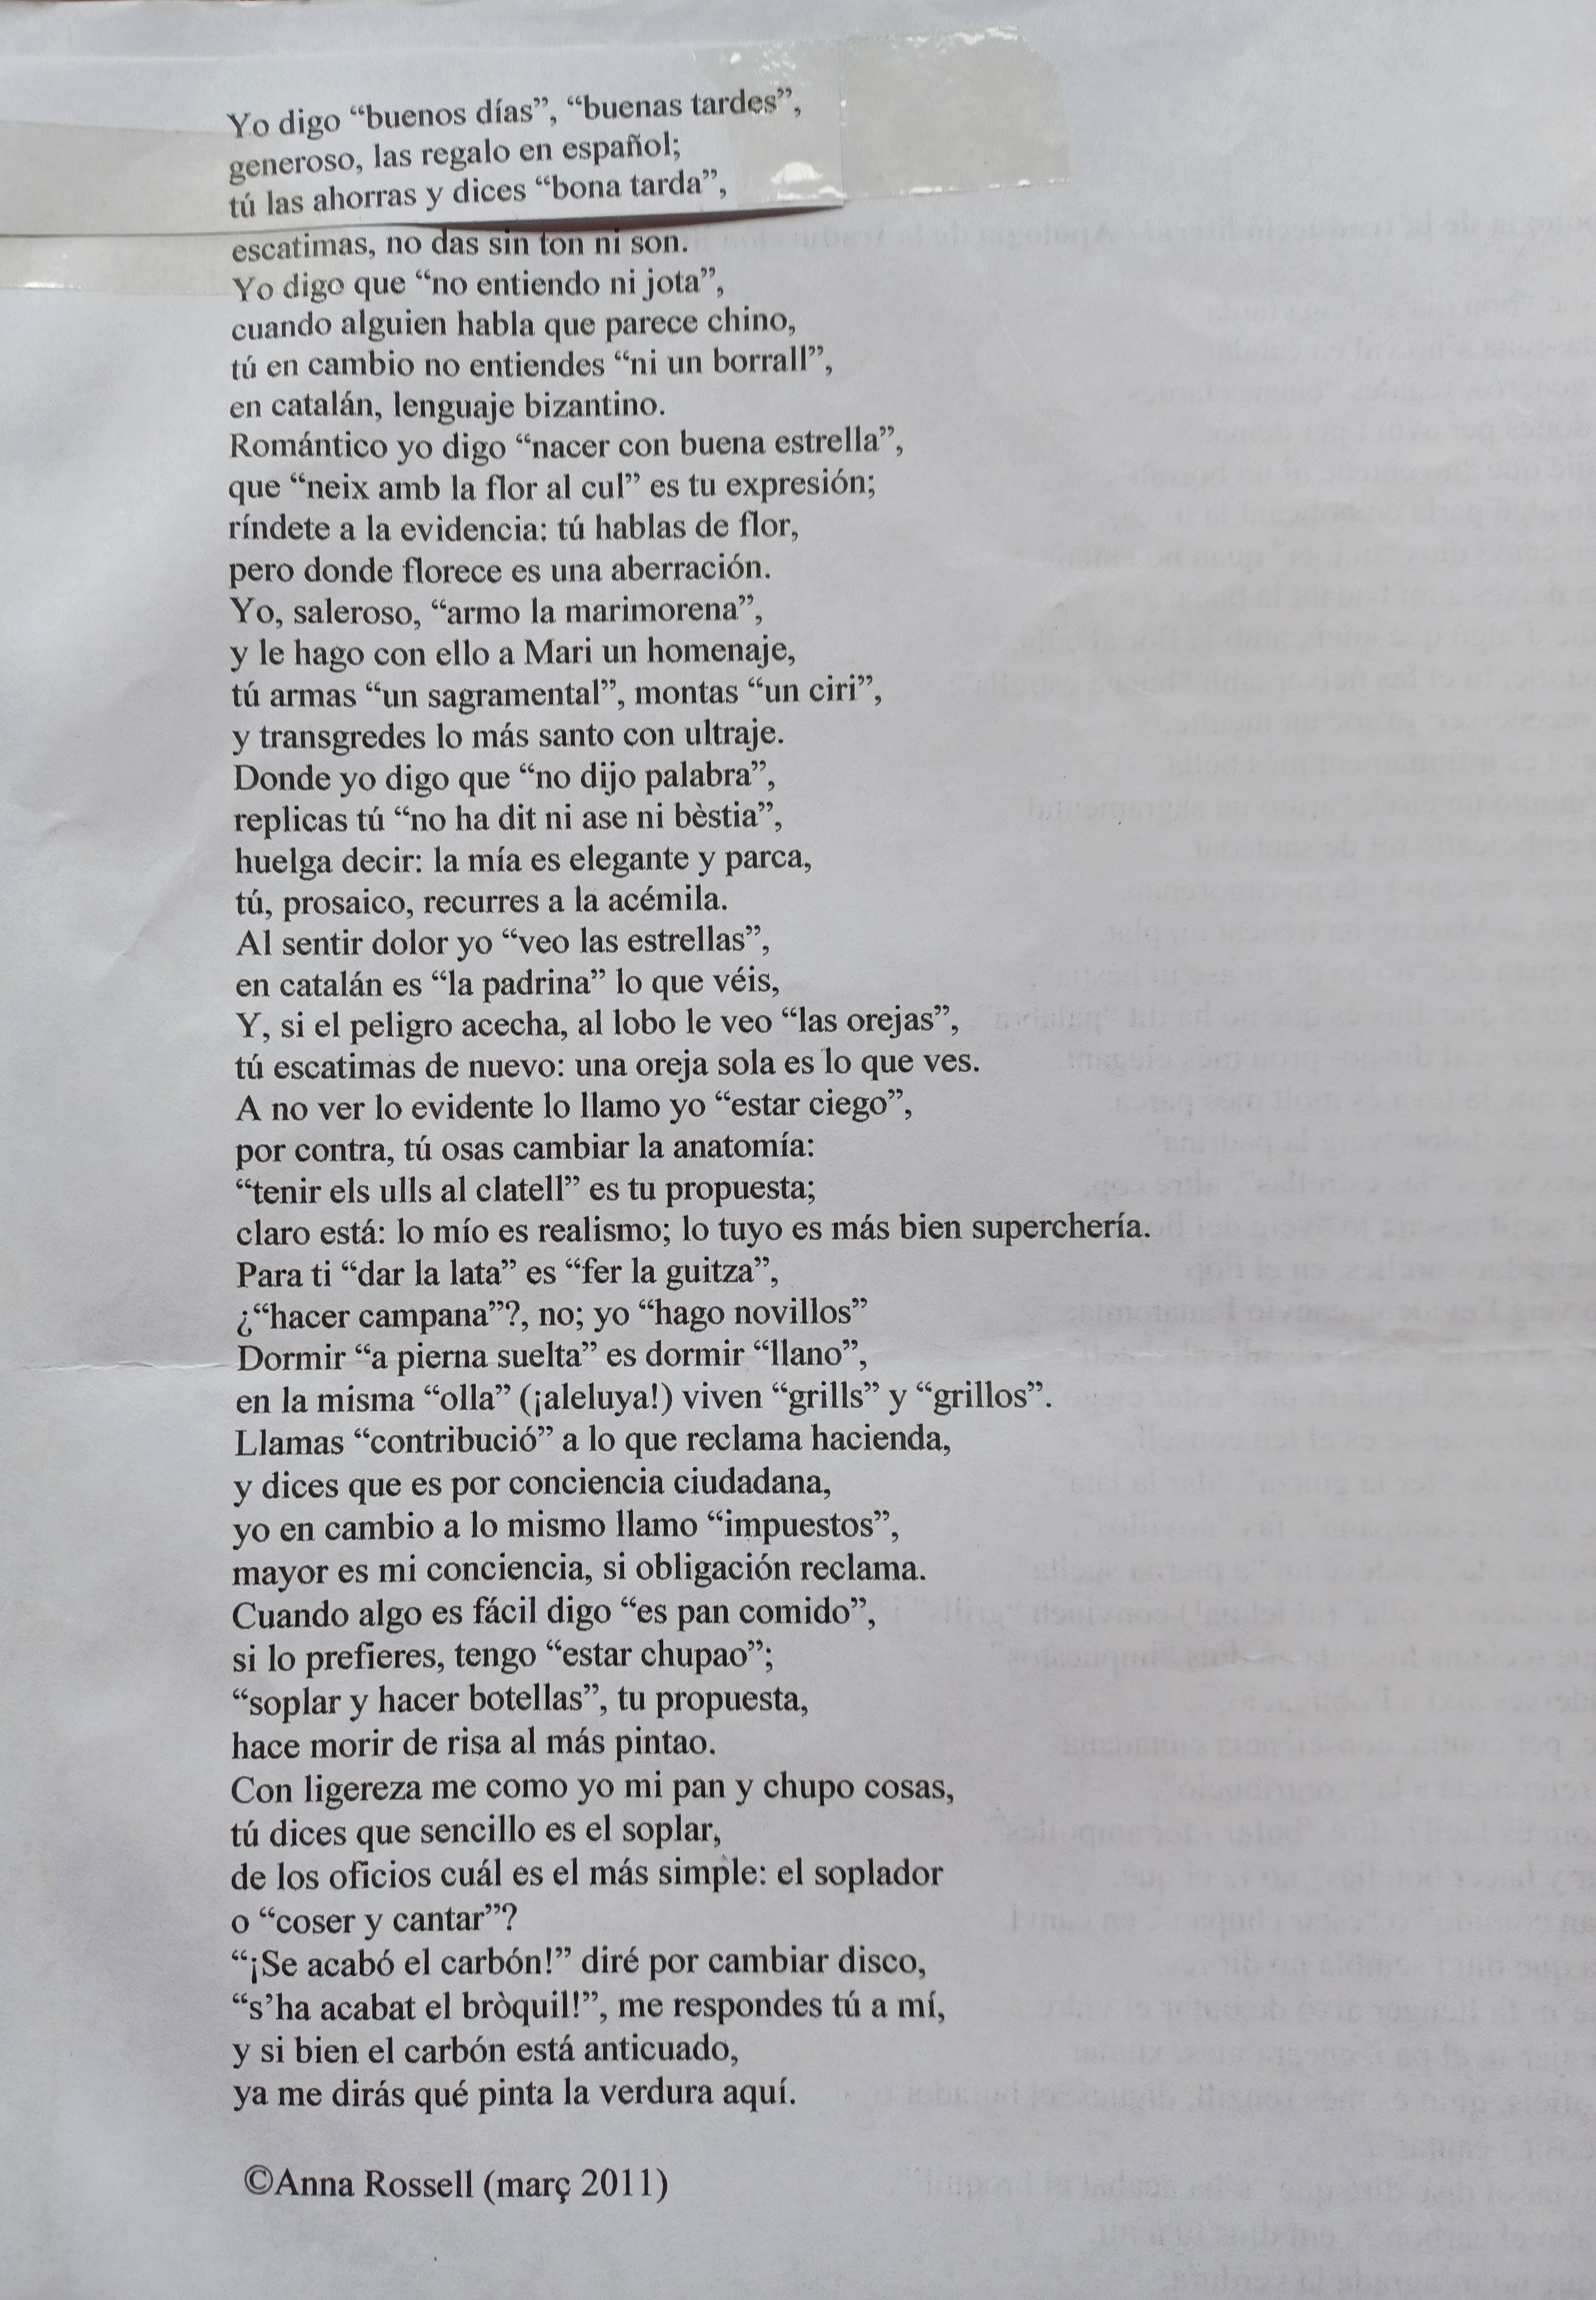 2ª part del poema d'Anna Rossell «Apologia de la traducció literal / Apología de la traducción liter